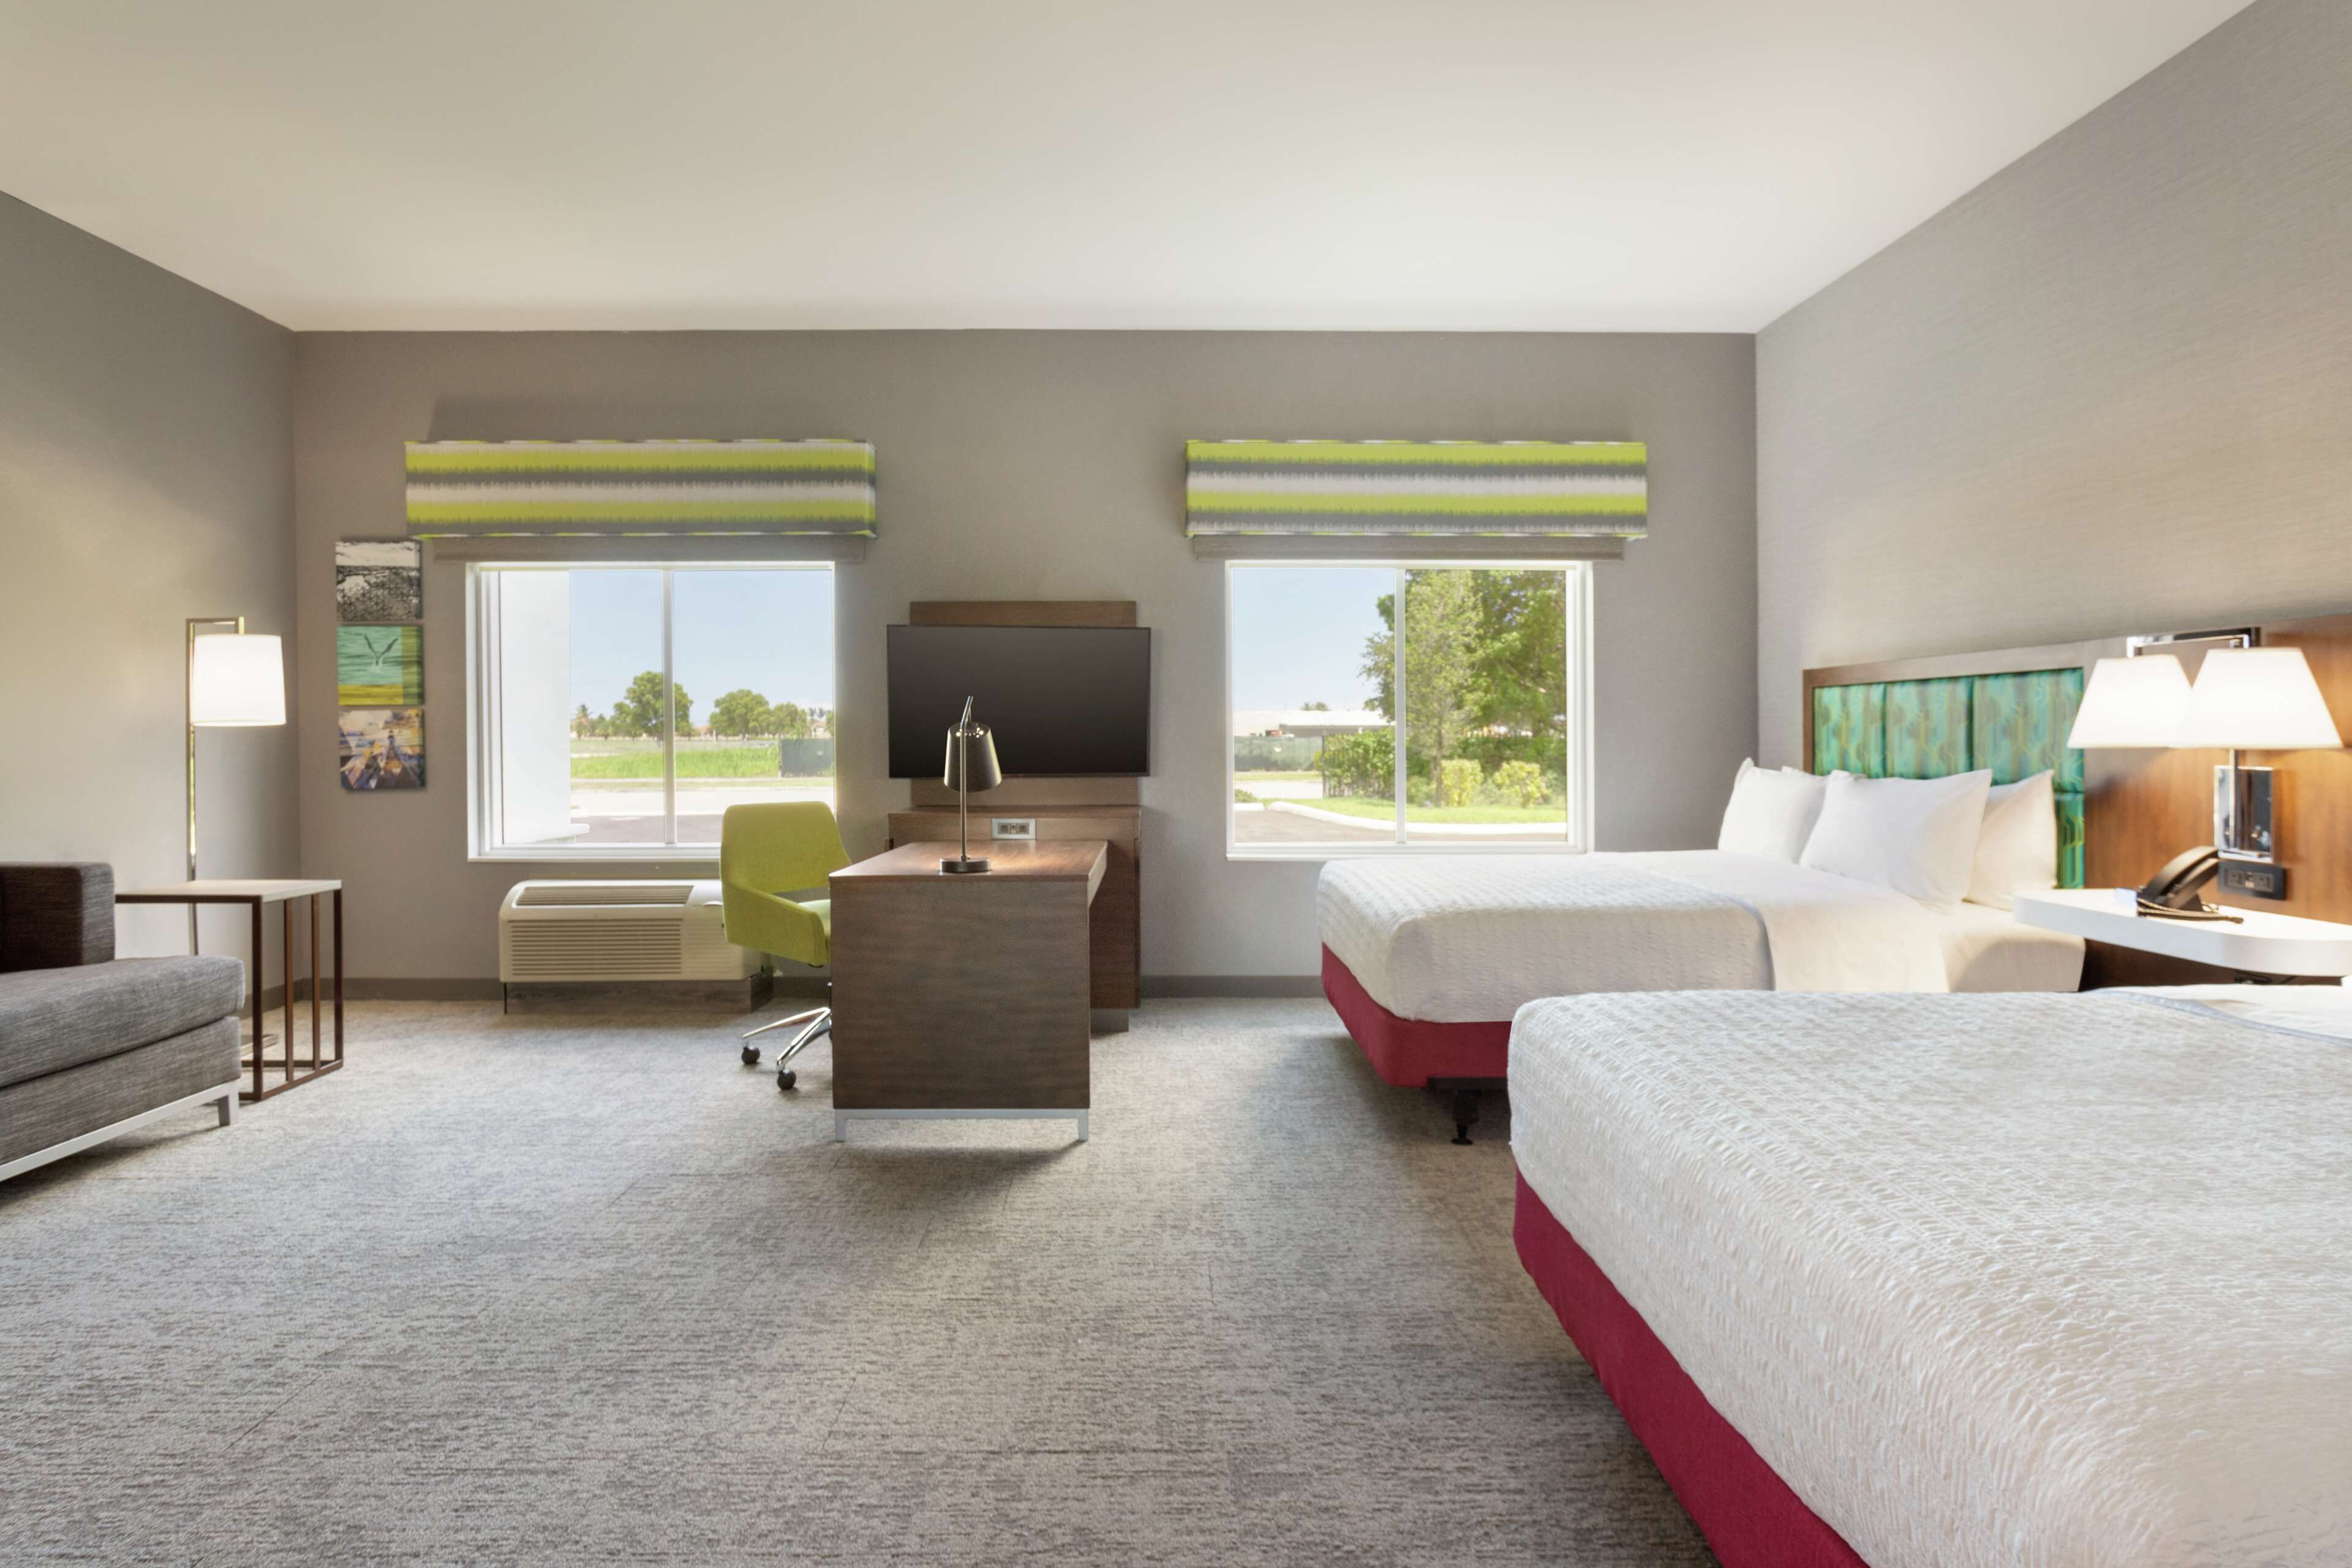 Hampton Inn and Suites by Hilton Miami Kendall